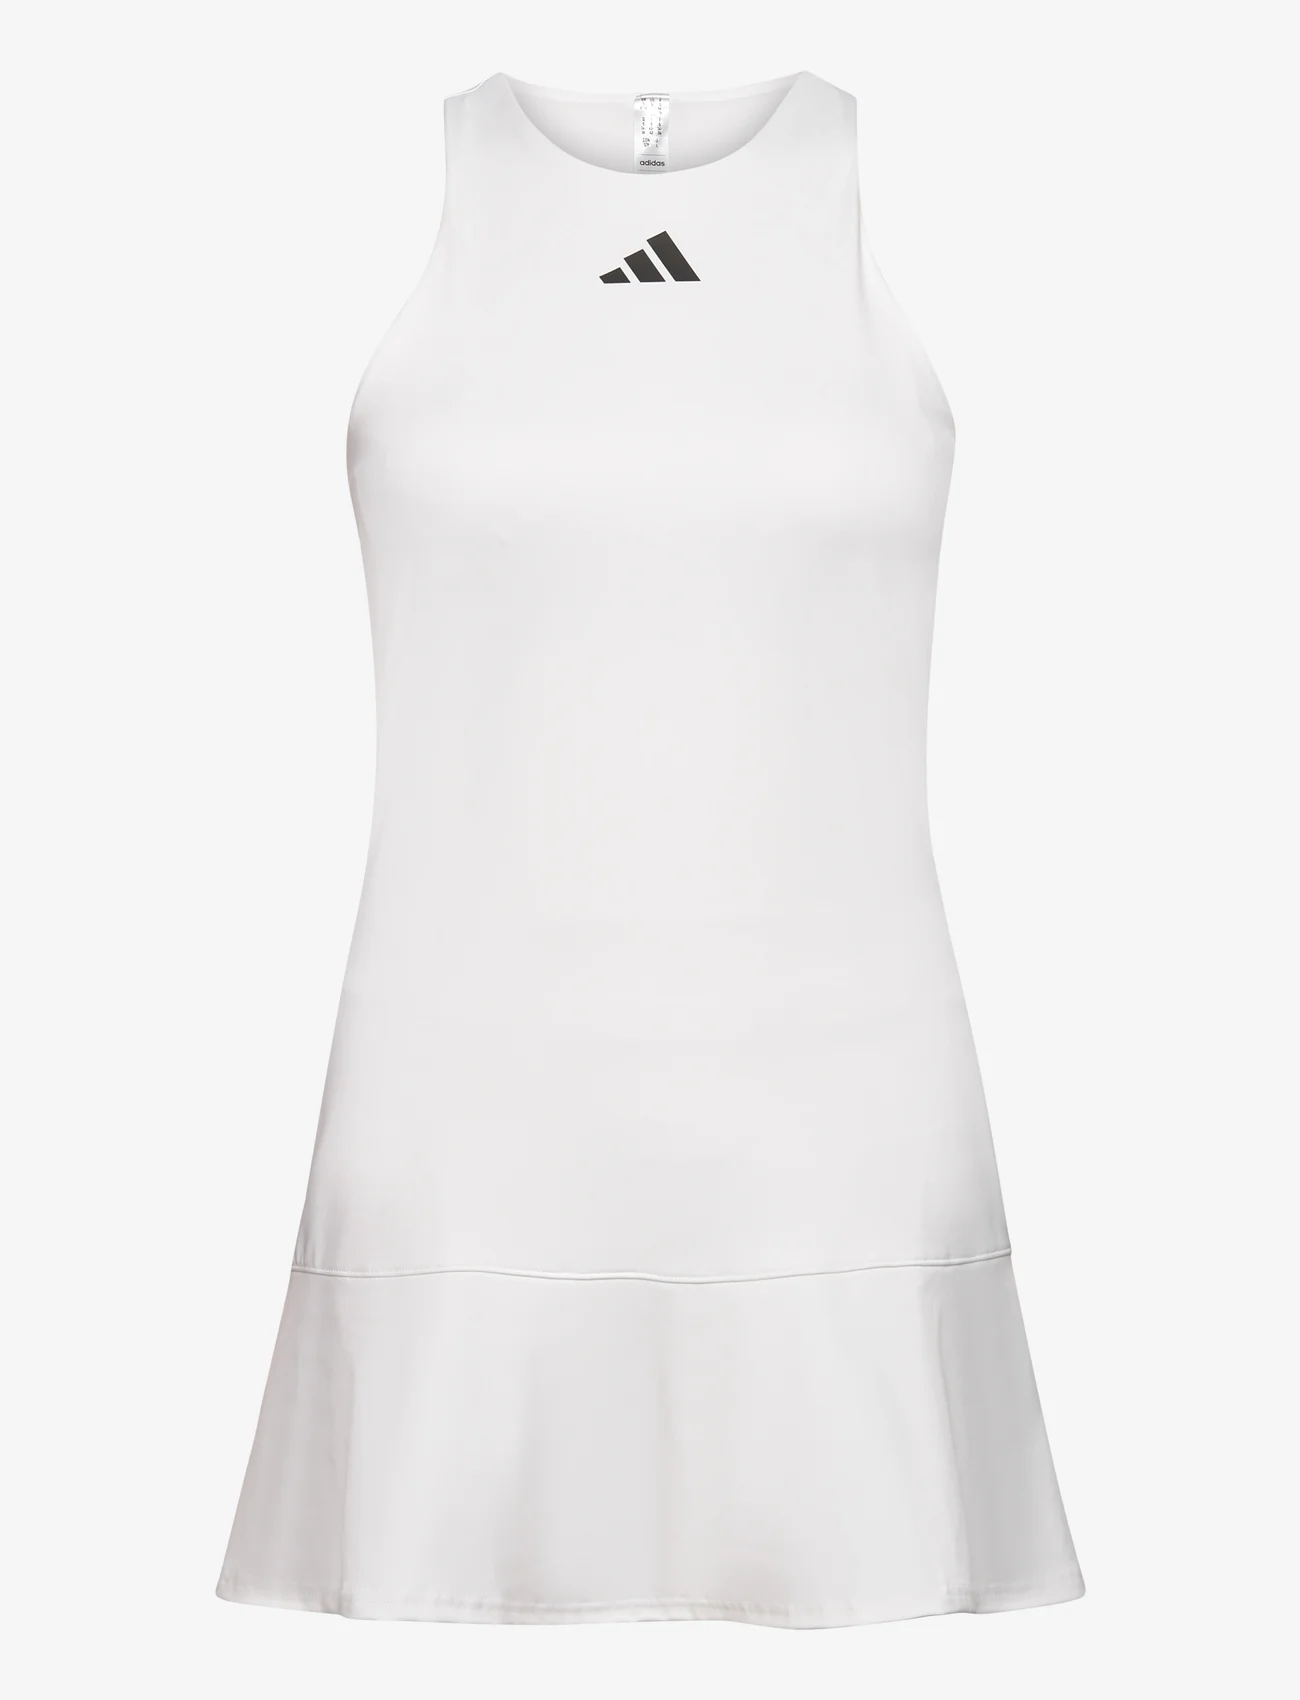 adidas Performance - Y-DRESS - sports dresses - 000/white - 0